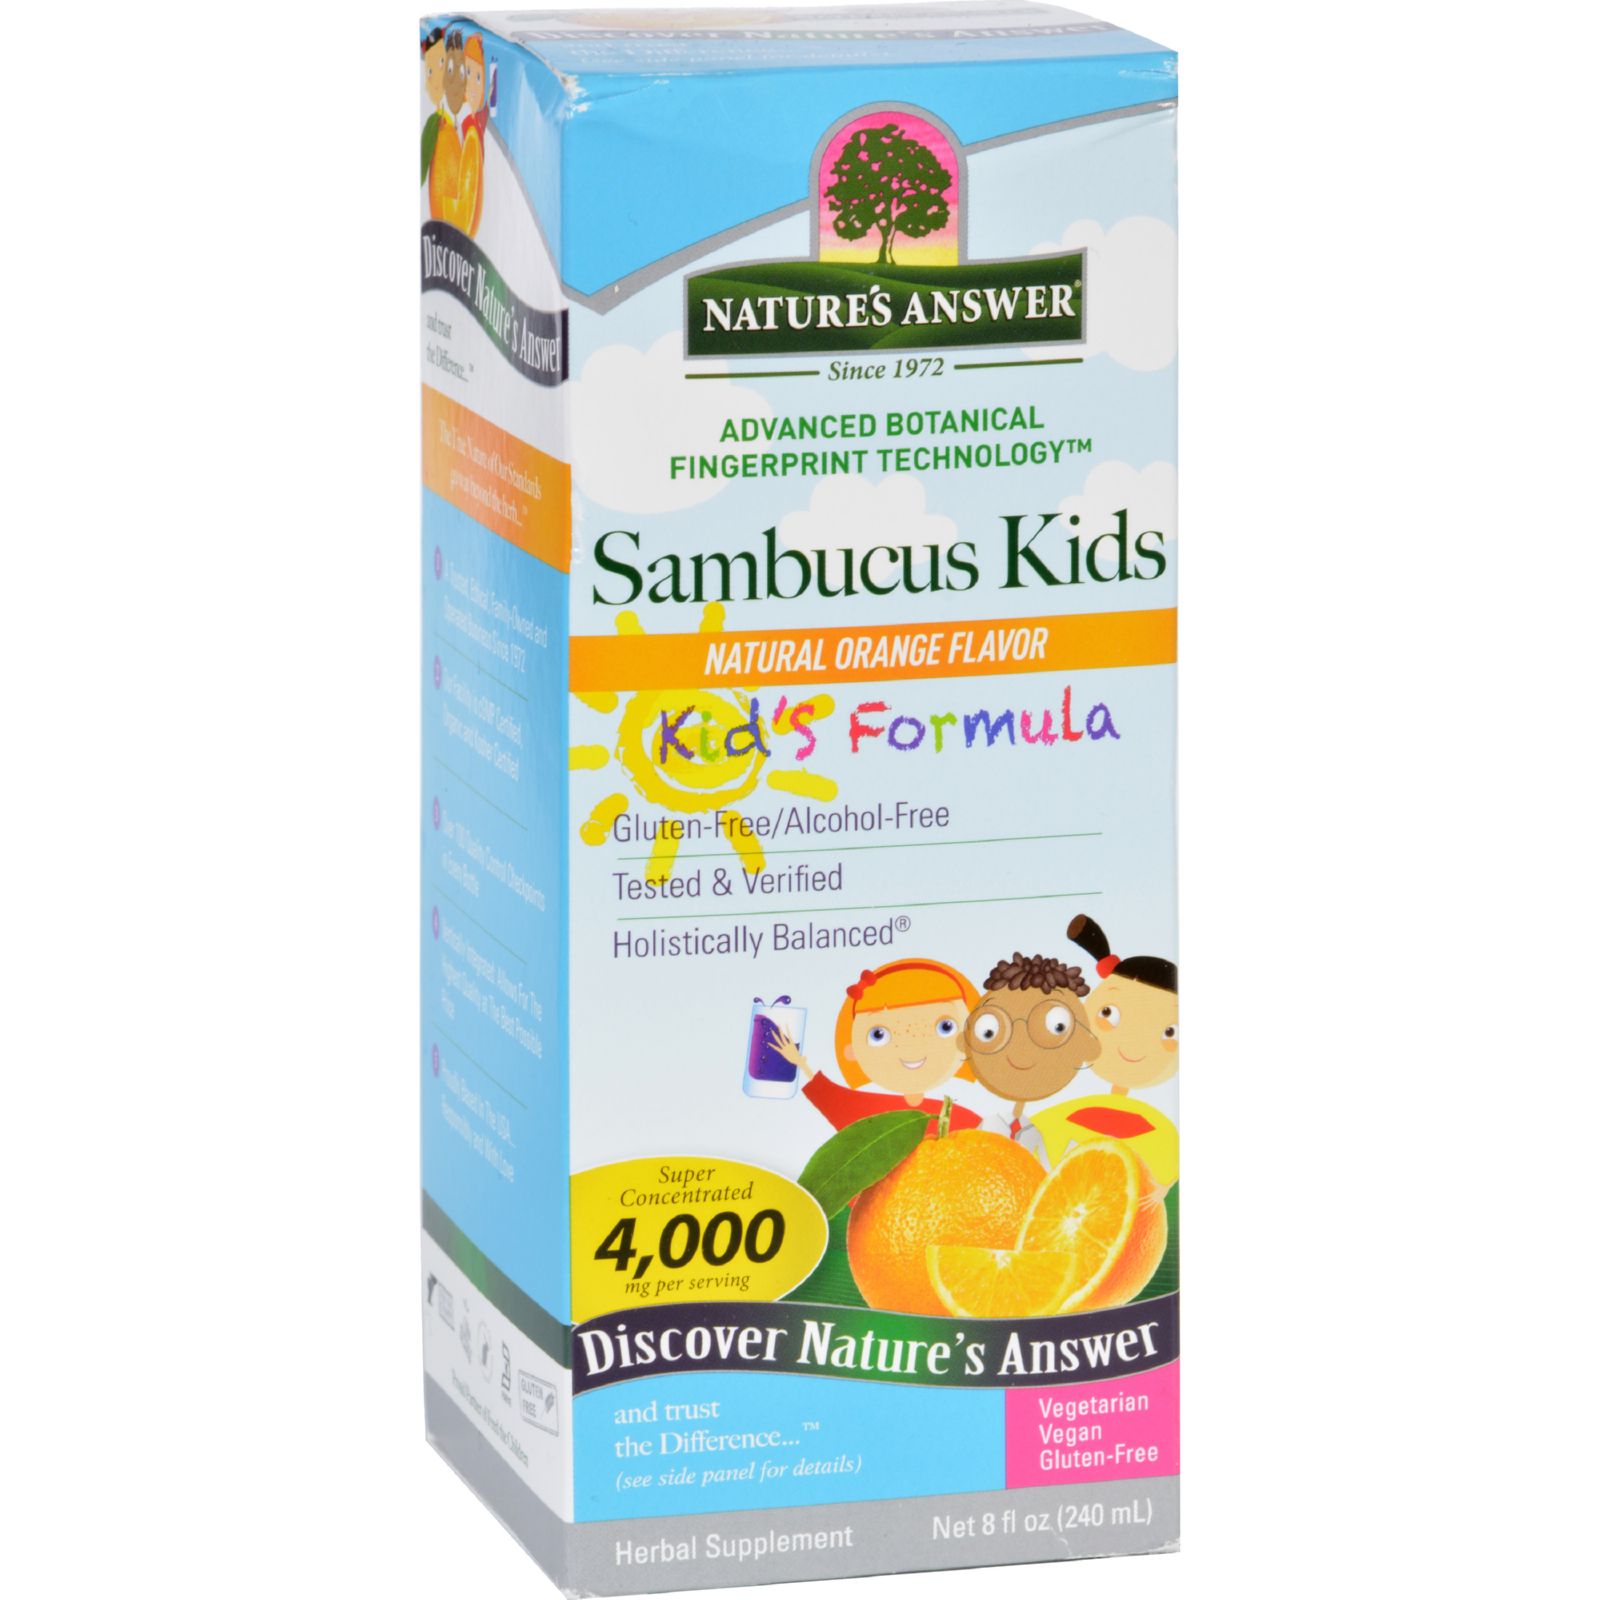 Natures Answer Sambucus - Kids Formula - Natural Orange Flavor - 8 oz